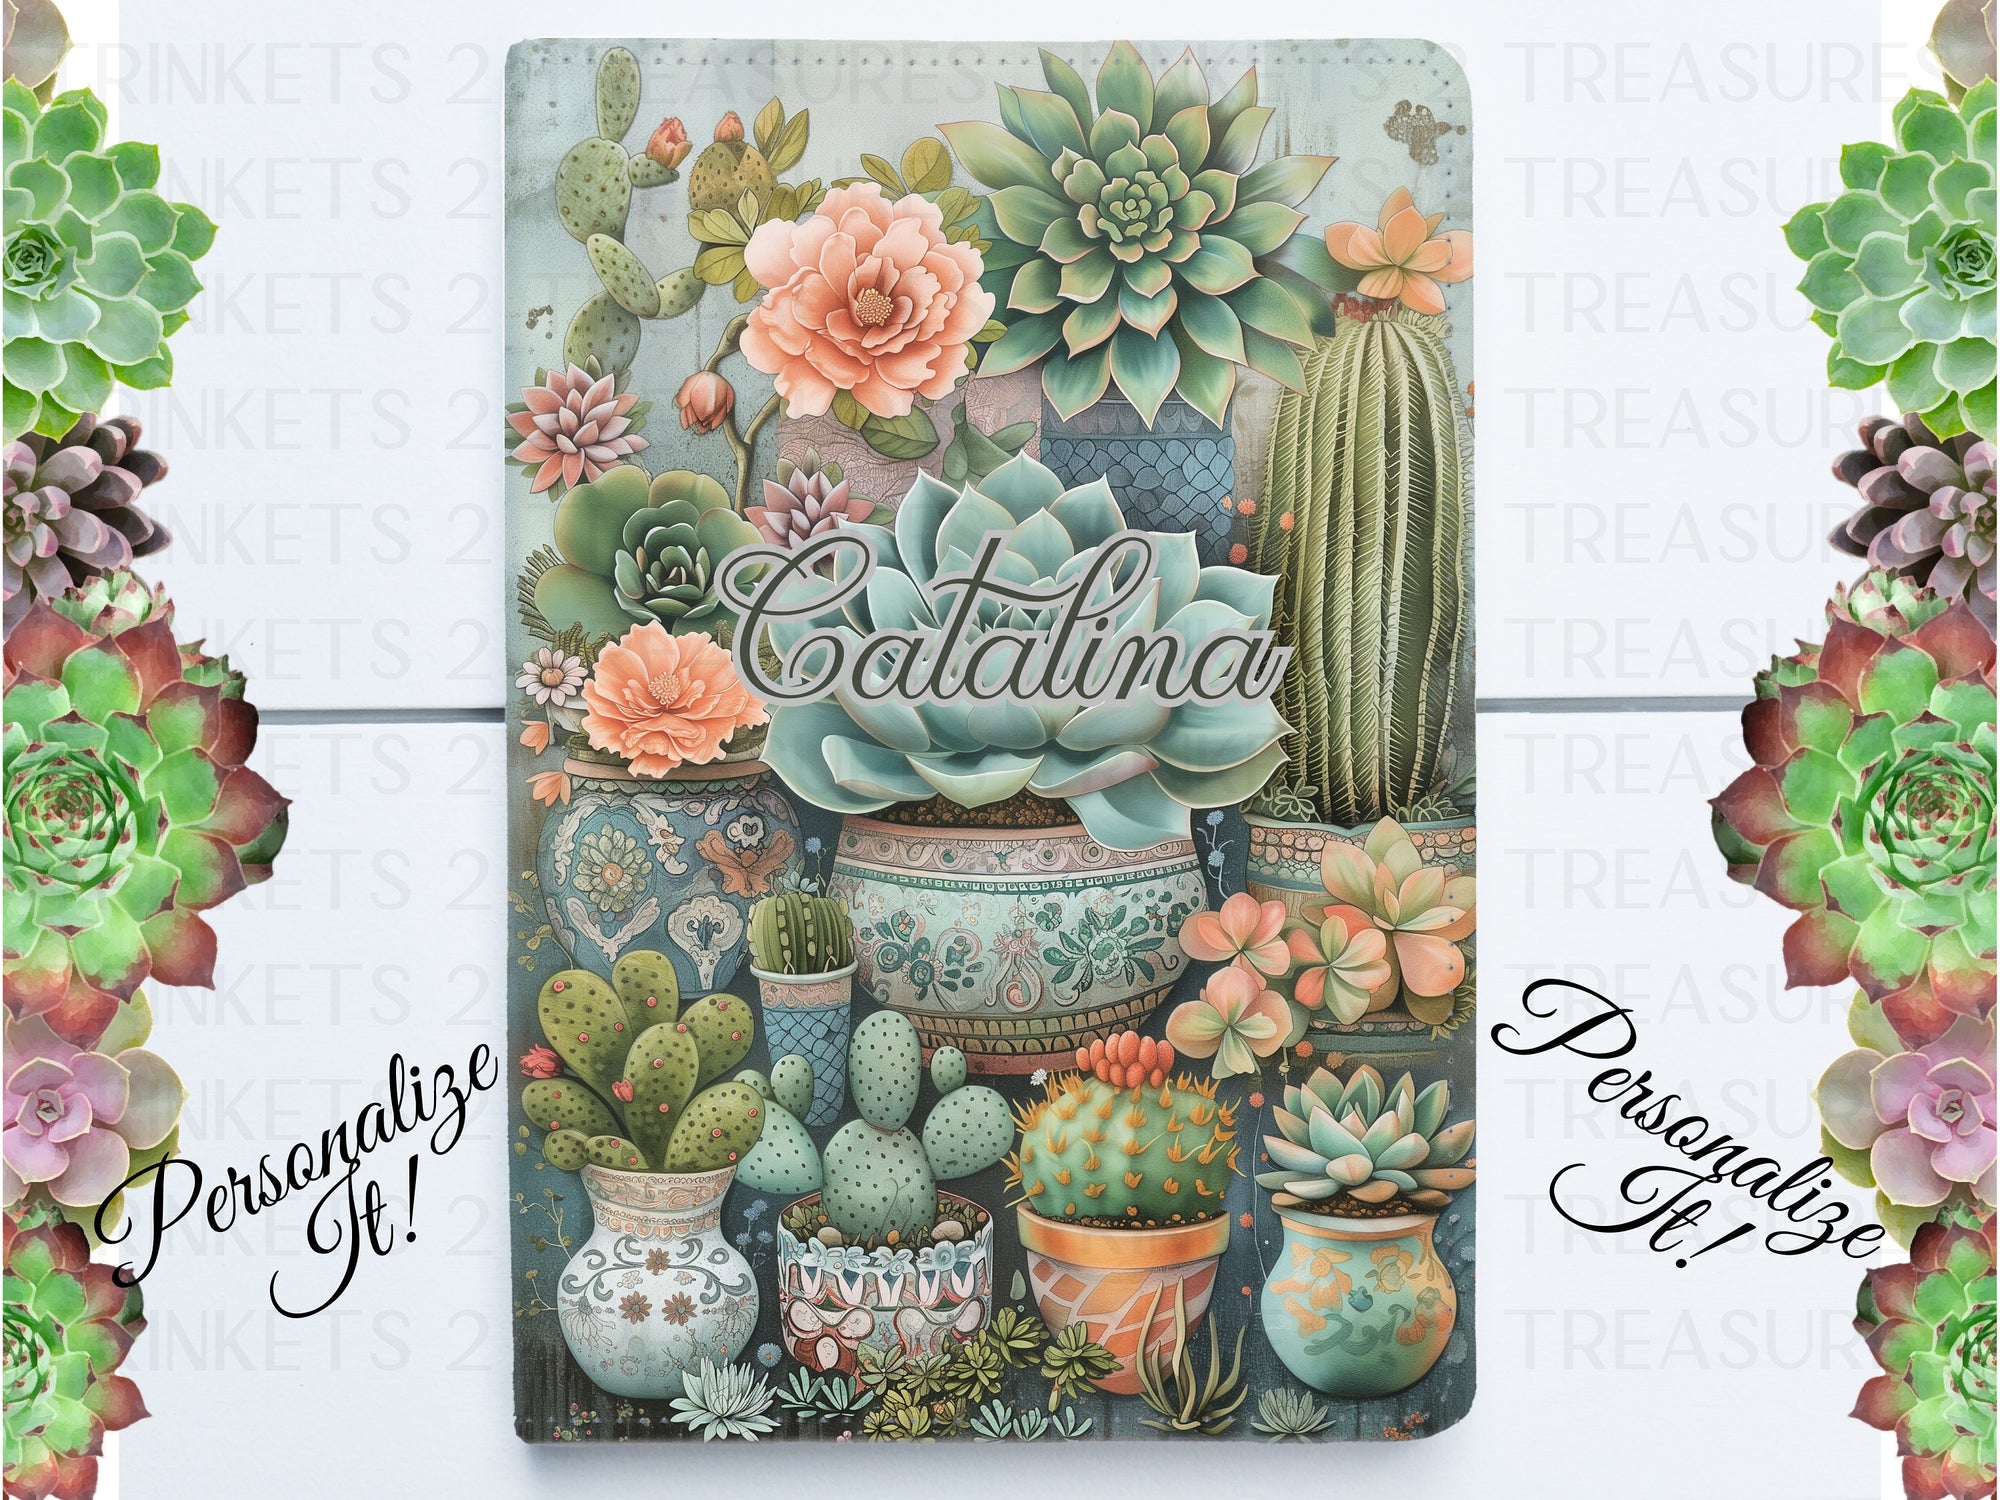 Personalized Journal/Succulents/Keepsake Journal #806